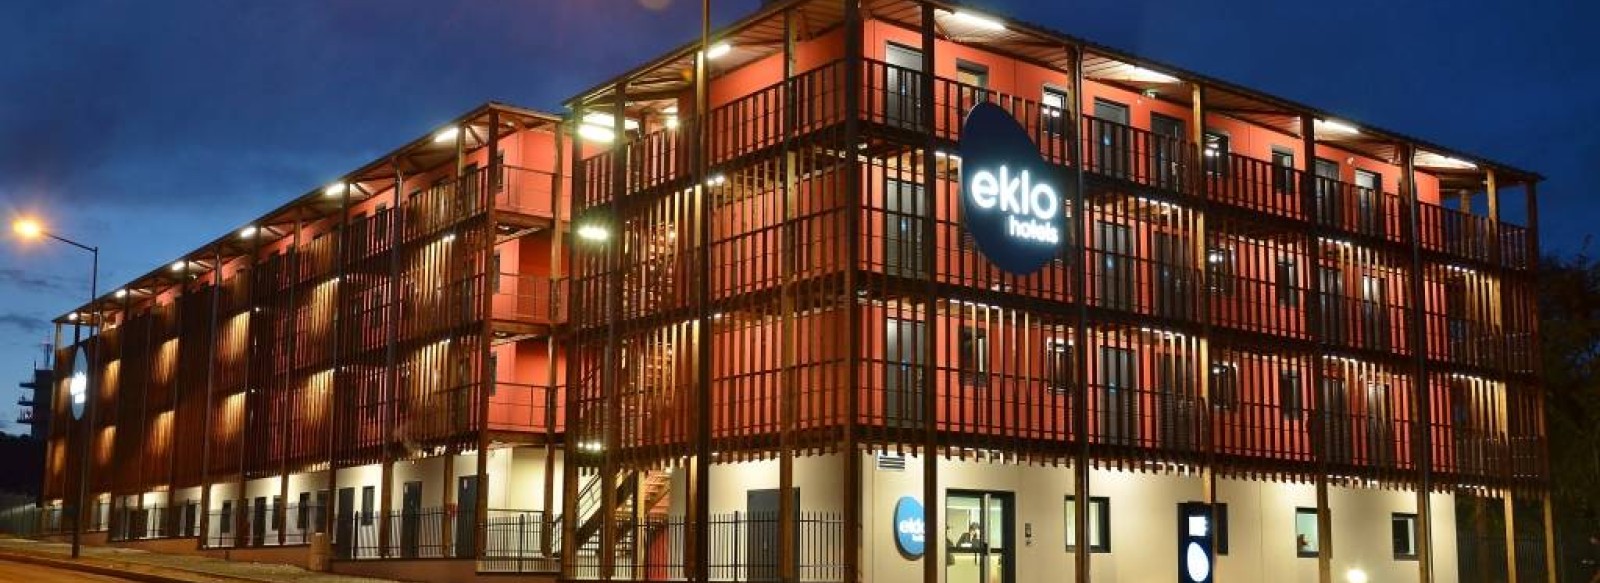 EKLO HOTELS